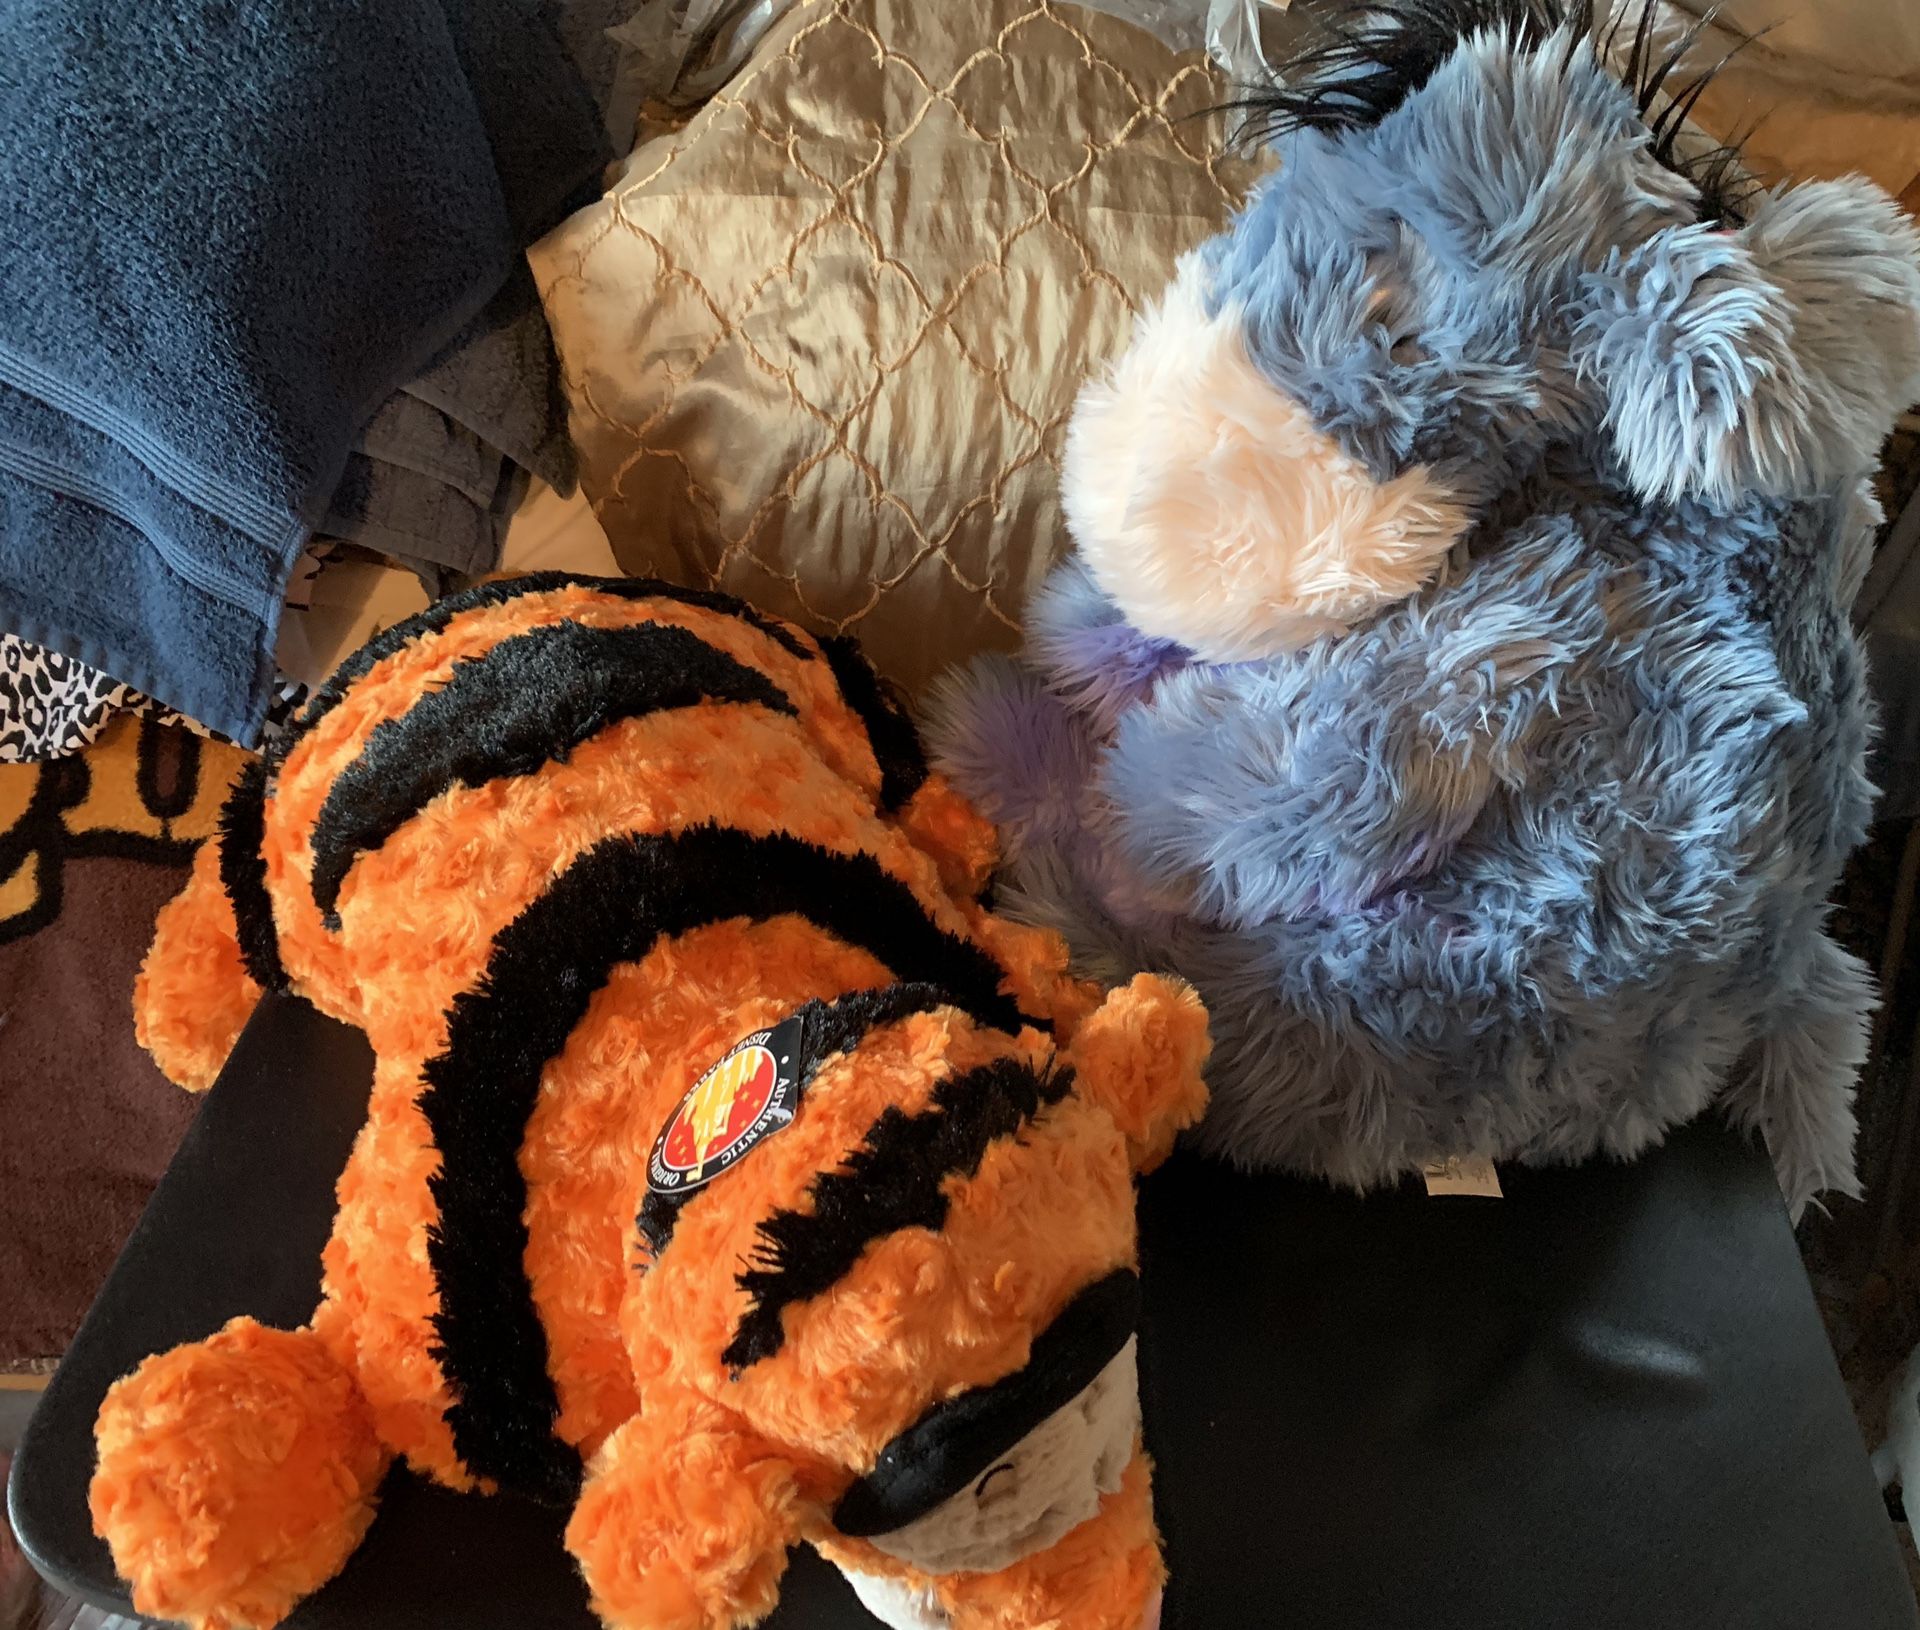 Tiger plush pillow and Eeyore plush